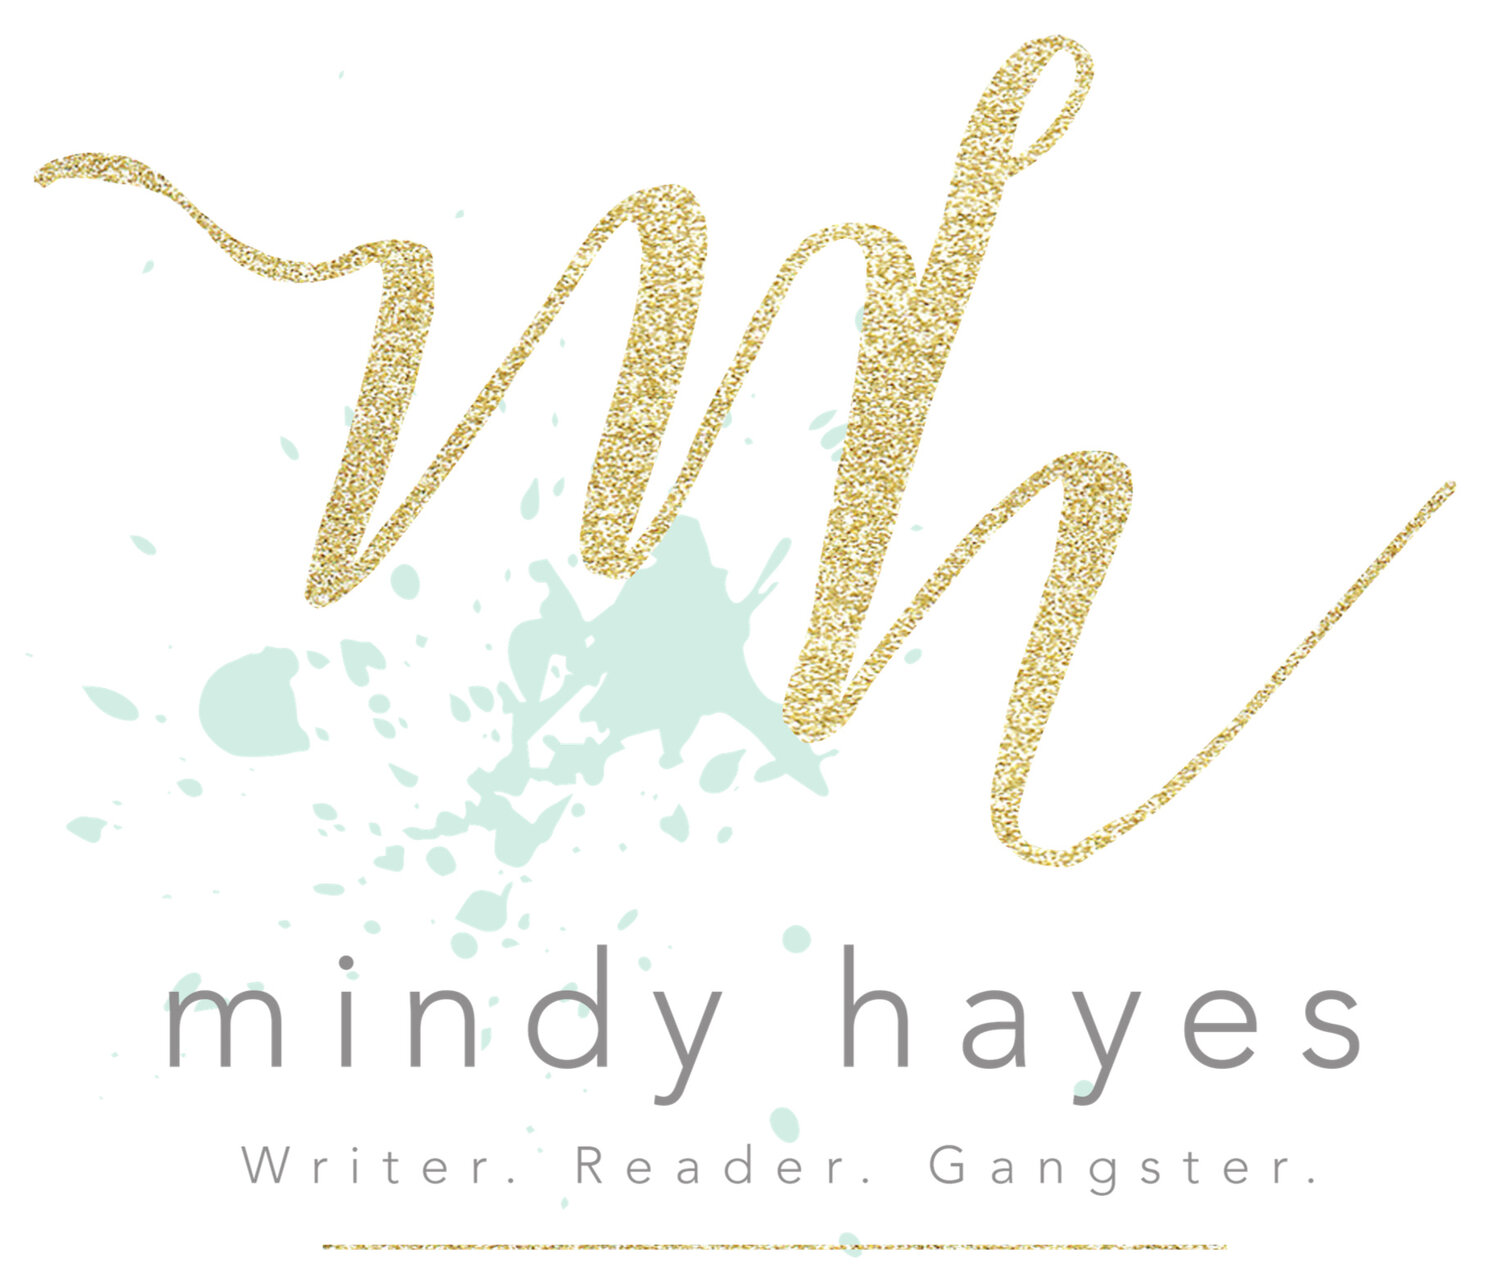 Mindy Hayes